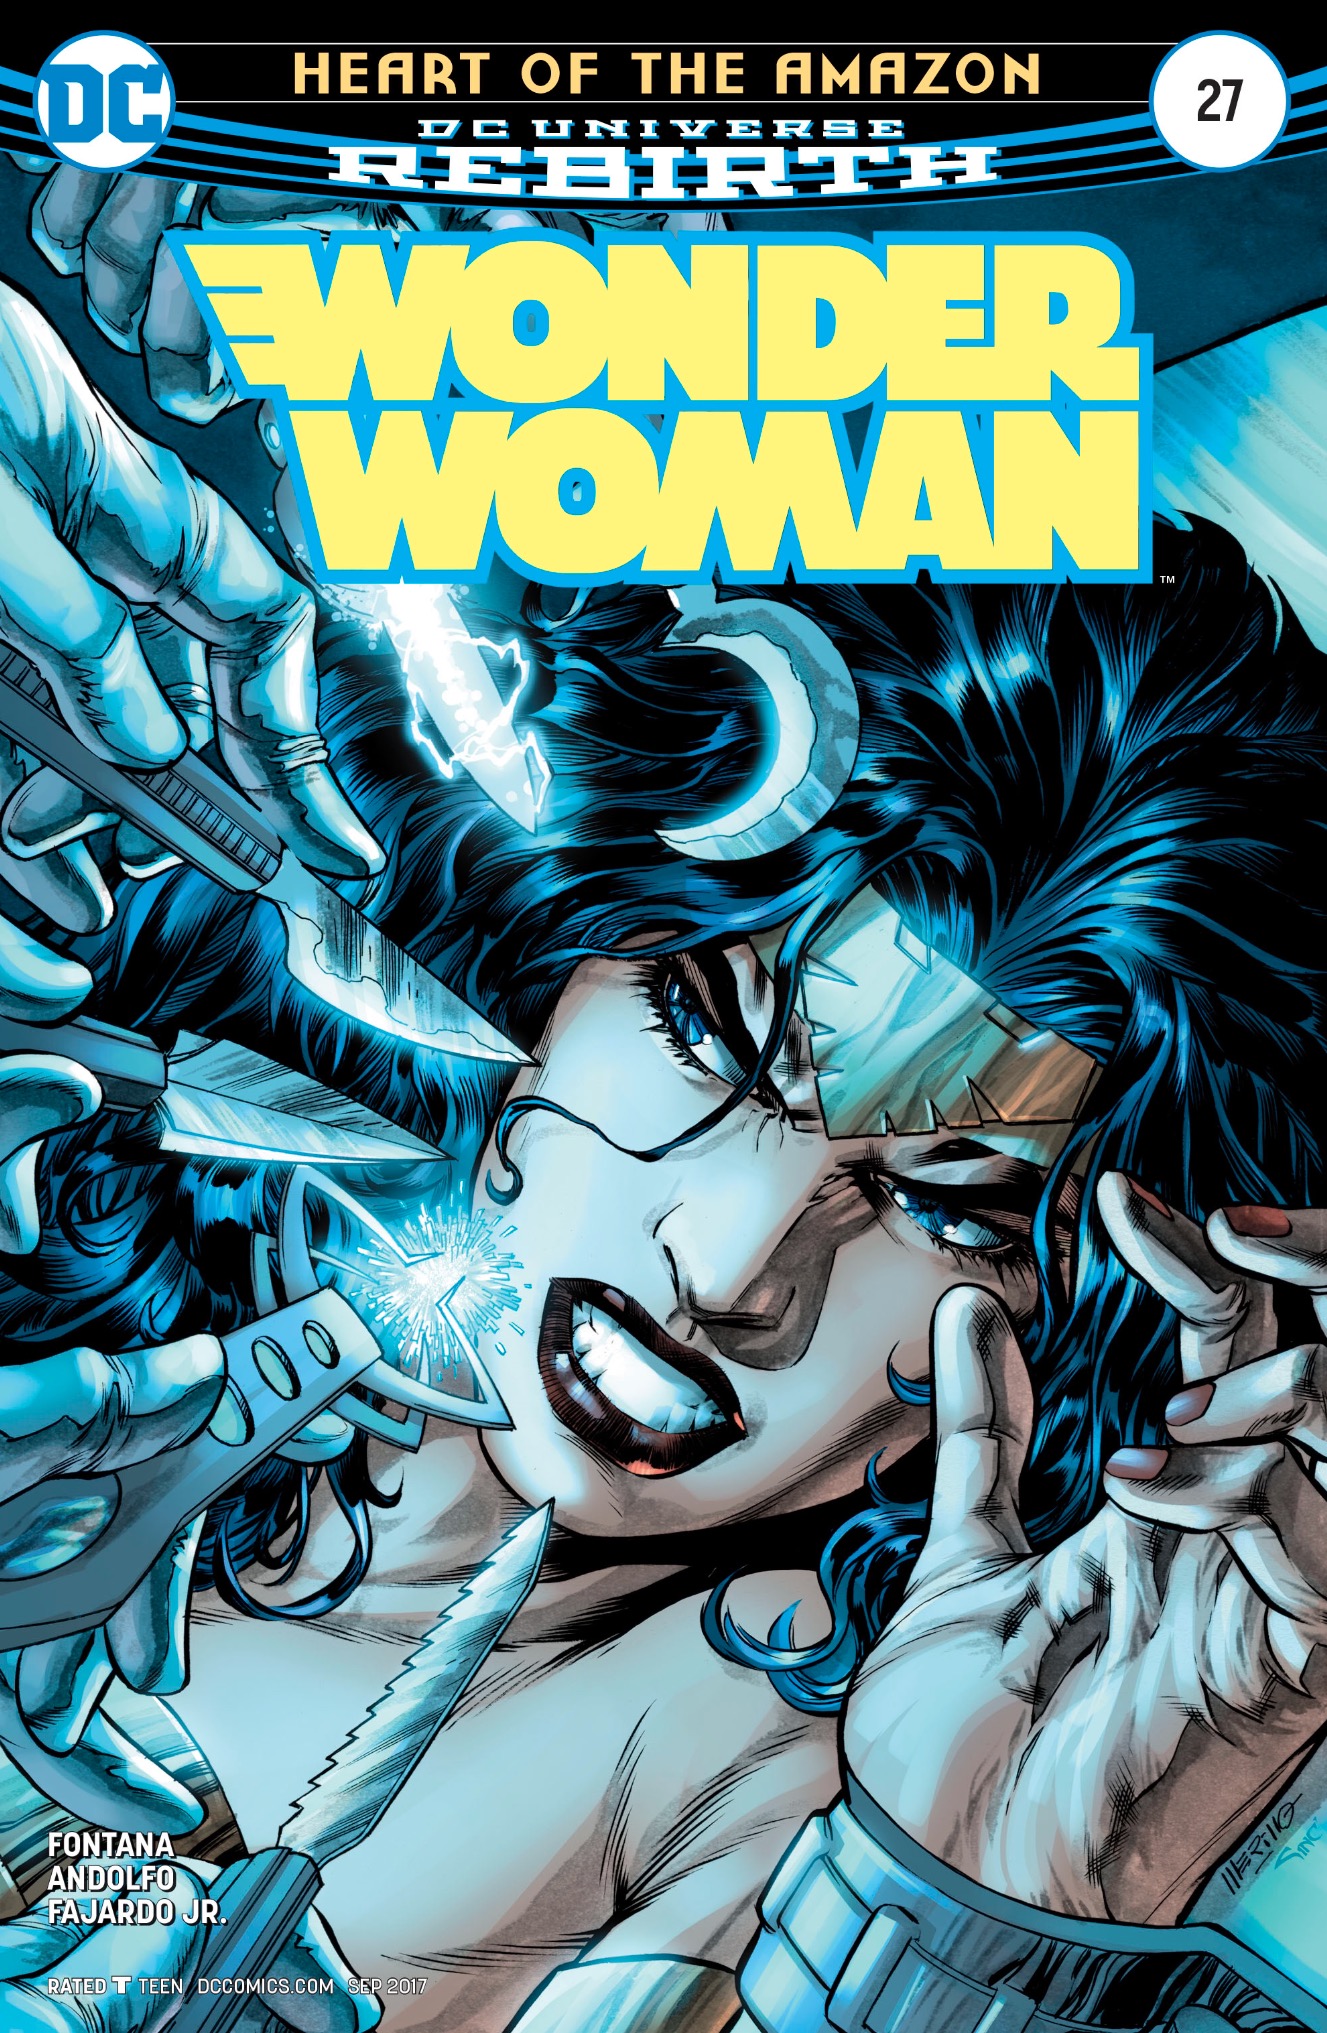 Wonder Woman #27 cover